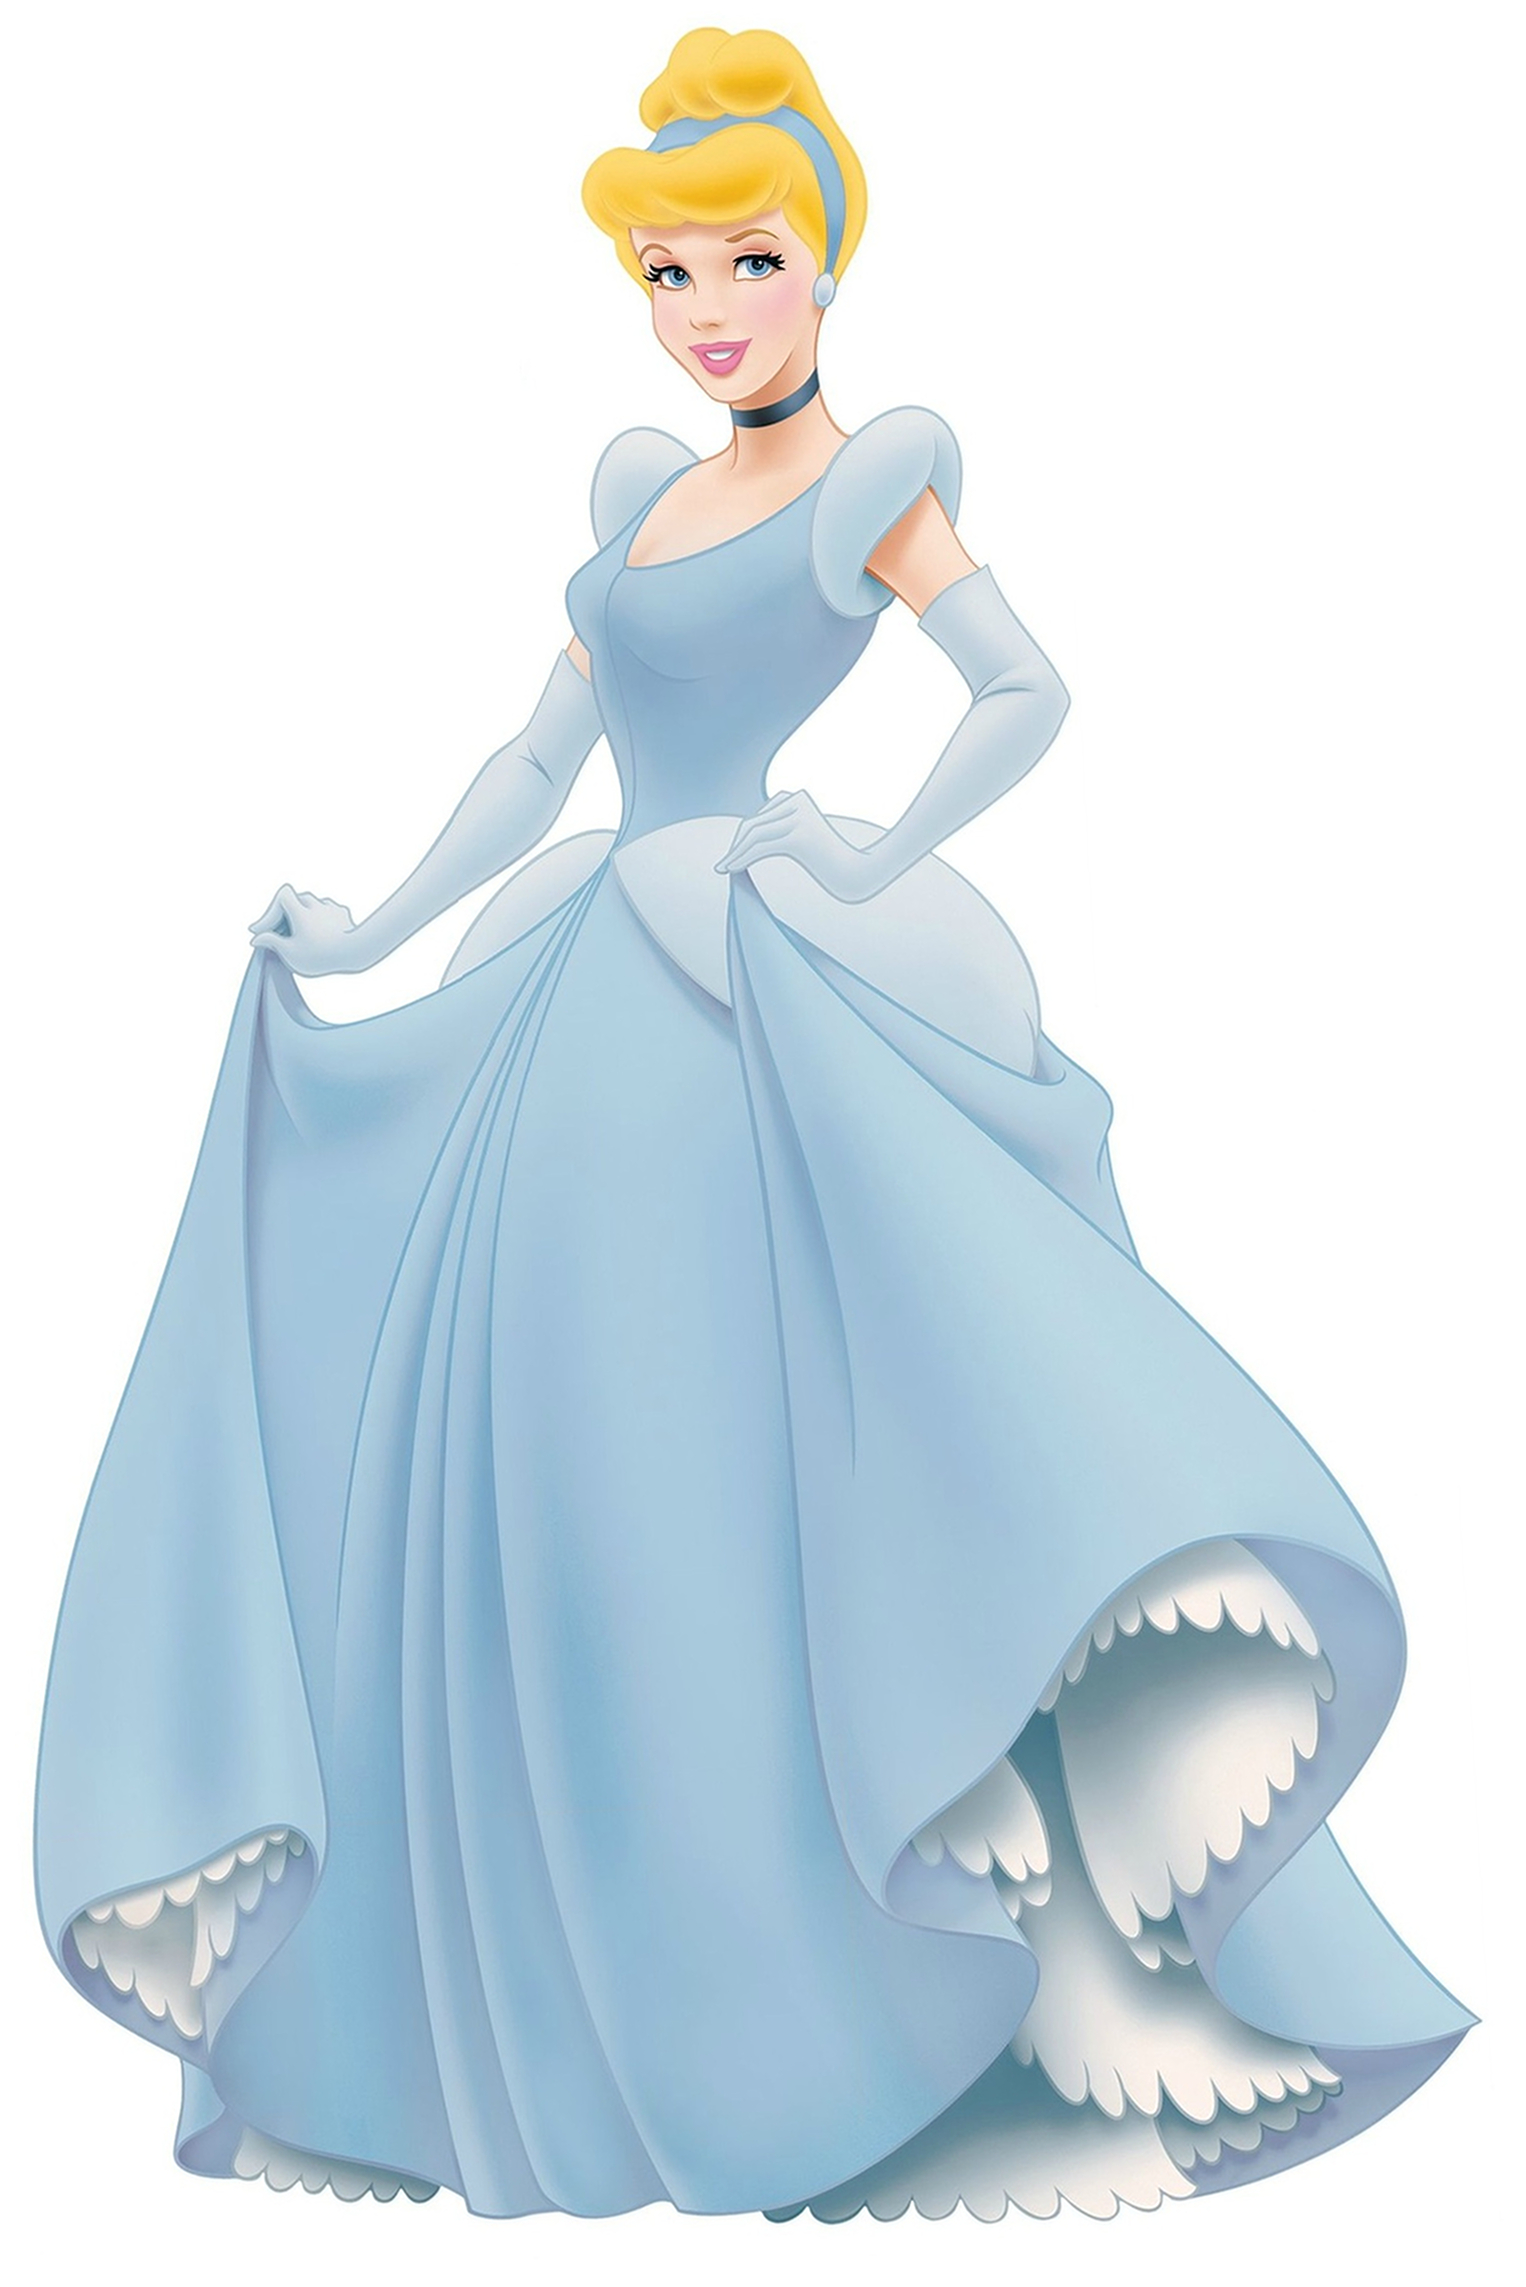 Cinderella - Childhood Animated Movie Characters Photo (39781763) - Fanpop